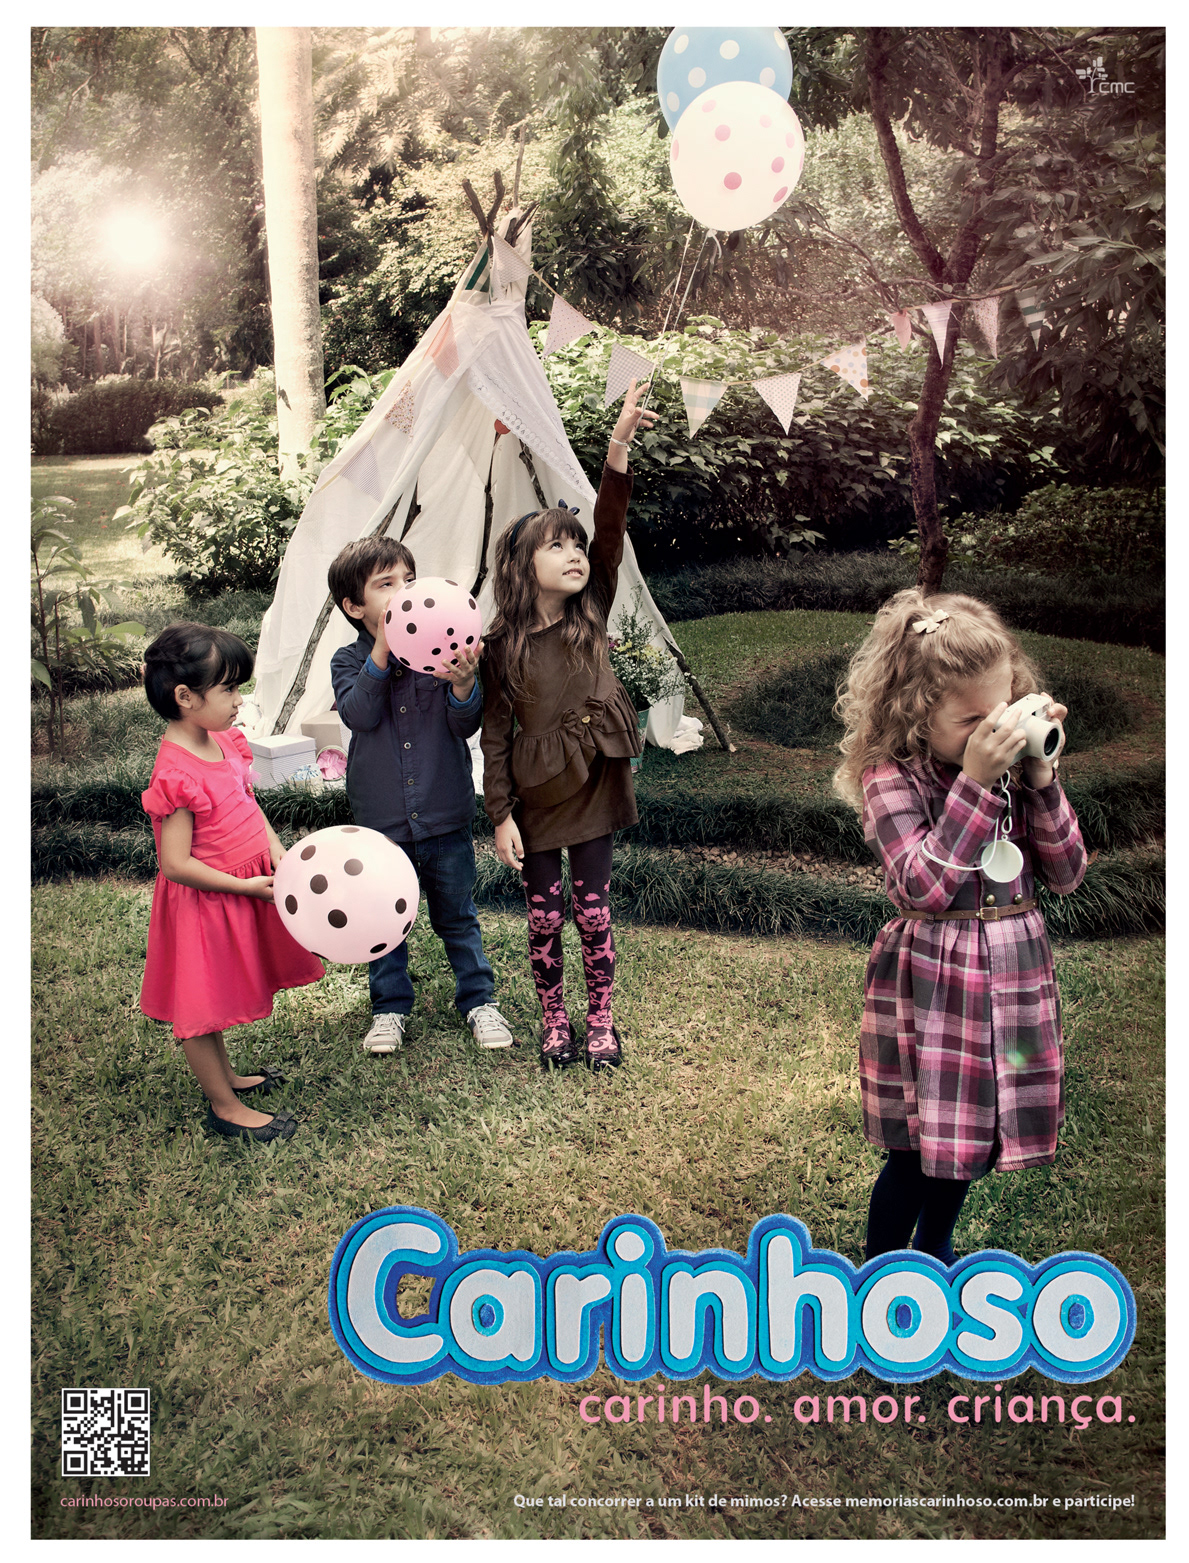 kids Clothing brand photo Carinhoso Birthday party Lomography Analogical